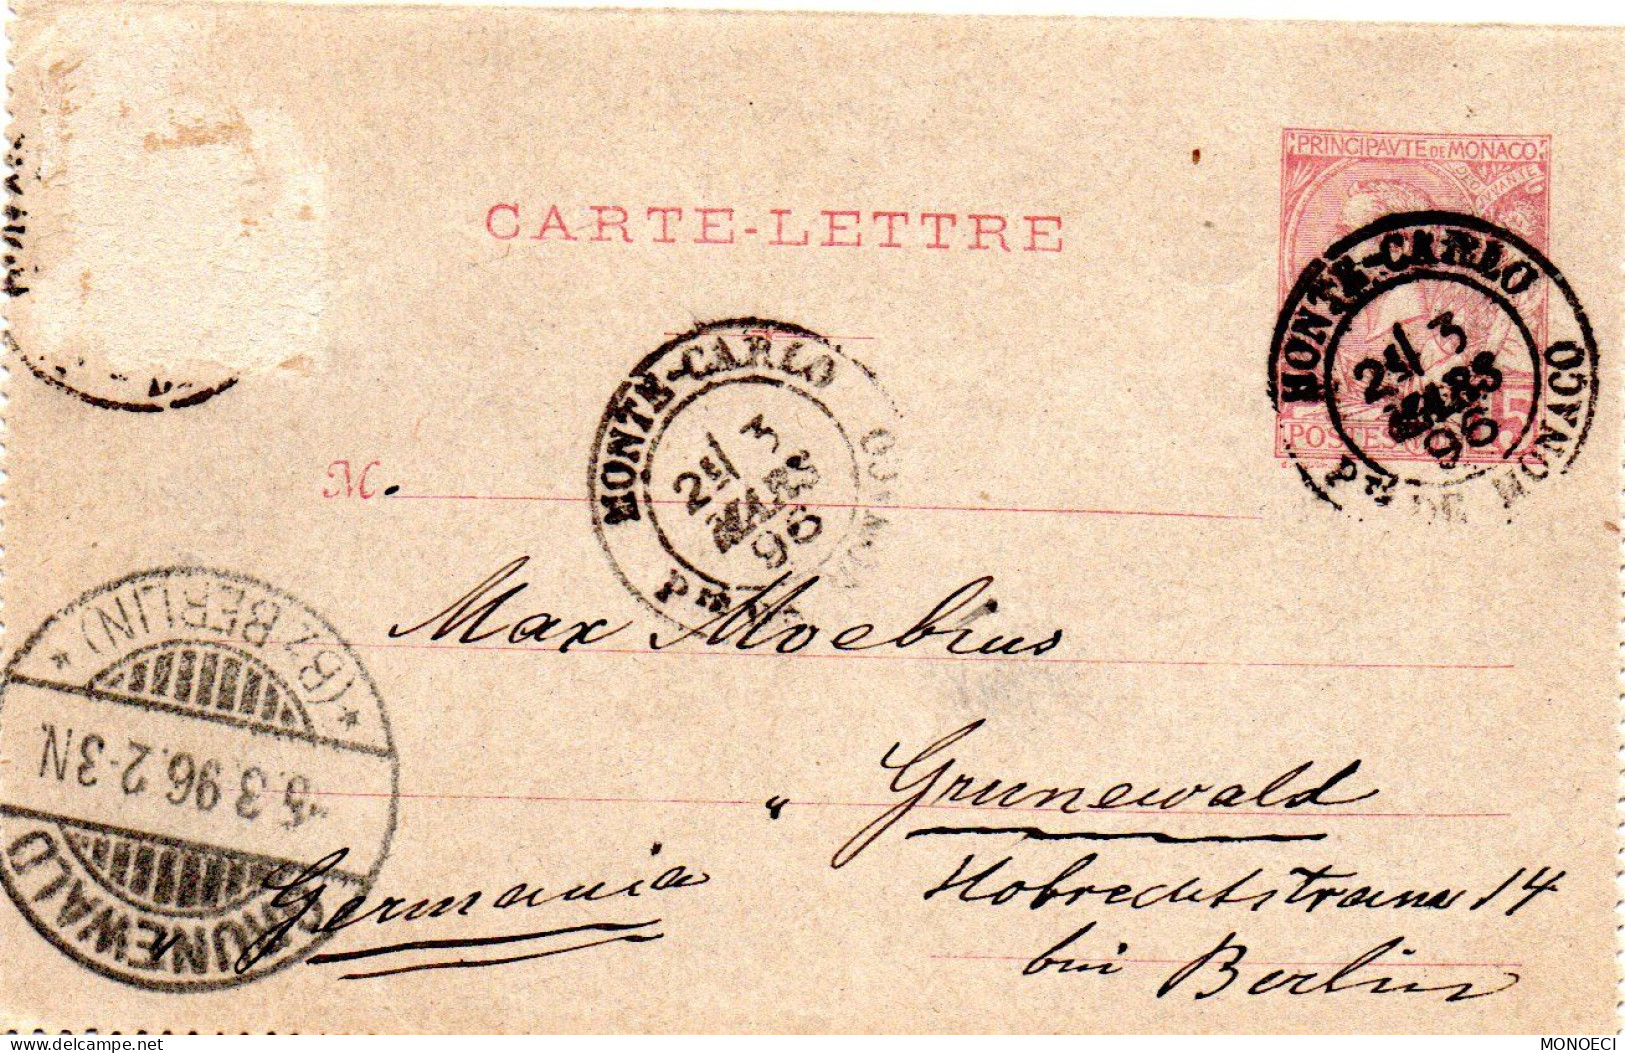 MONACO -- MONTE CARLO -- Entier Postal -- Carte Lettre -- Prince Albert 1er -- 10 C. Carmin Sur Gris (1891) - Enteros  Postales